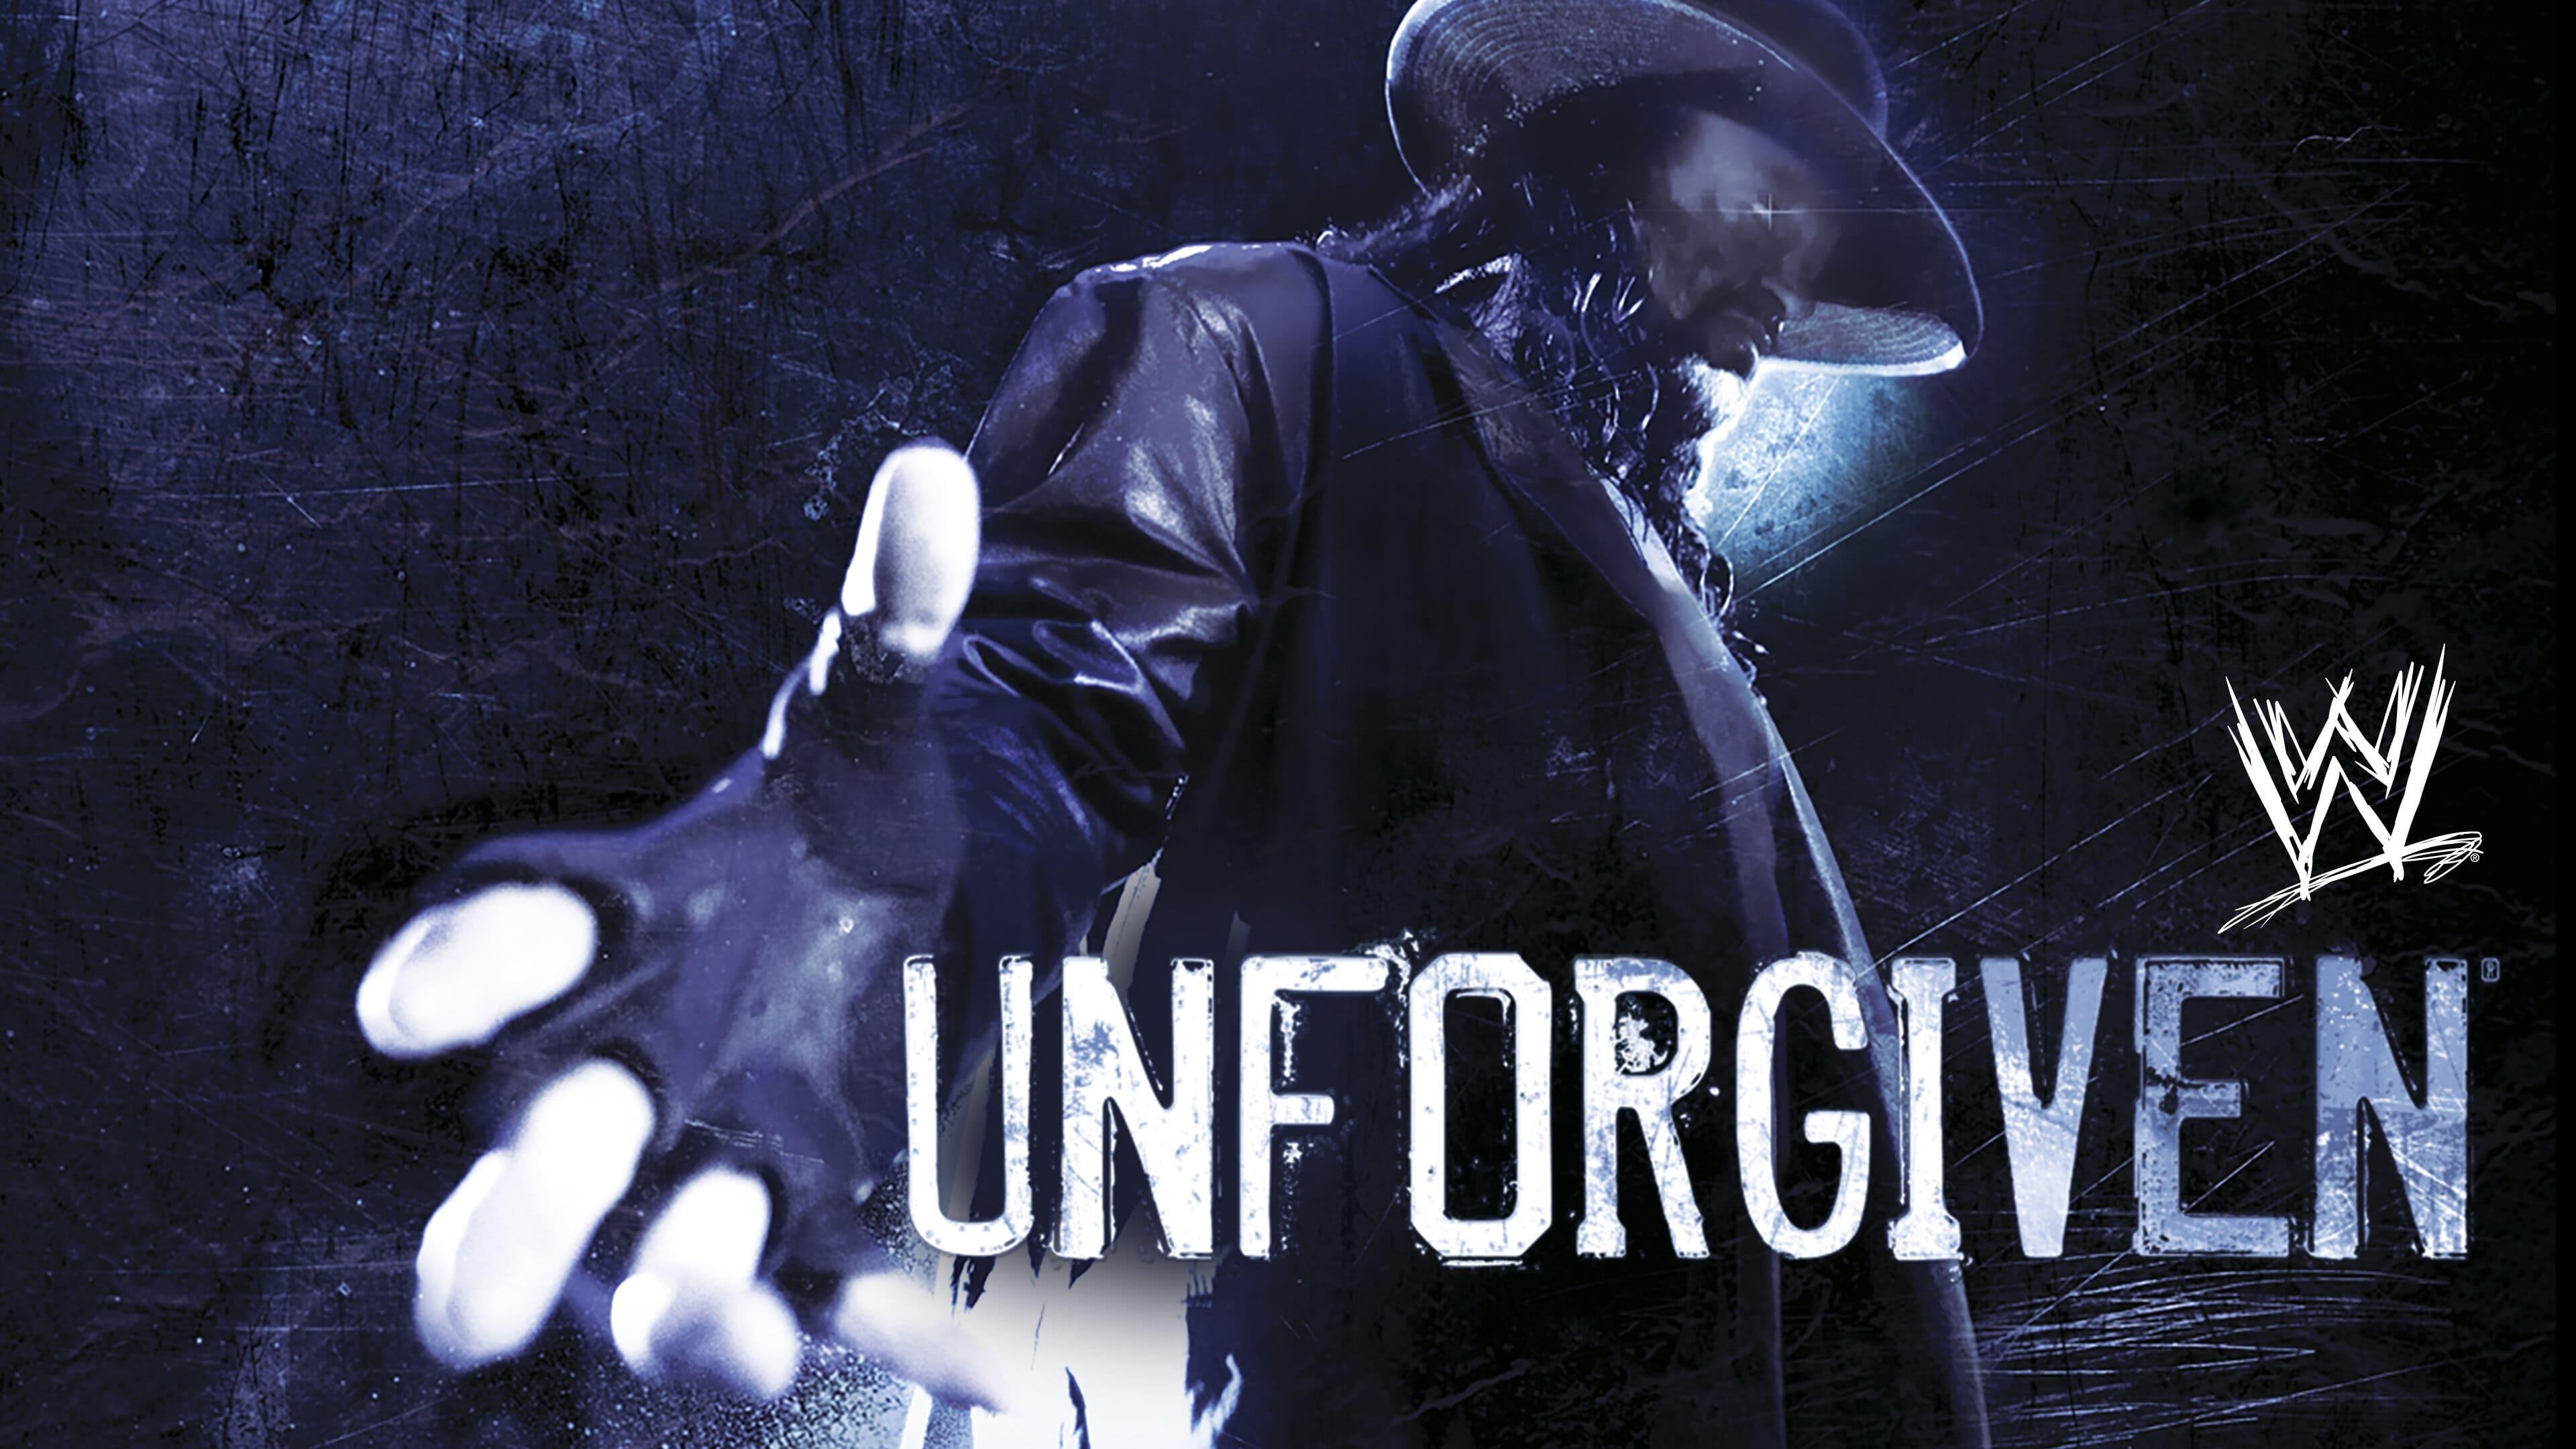 WWE Unforgiven 2007 backdrop